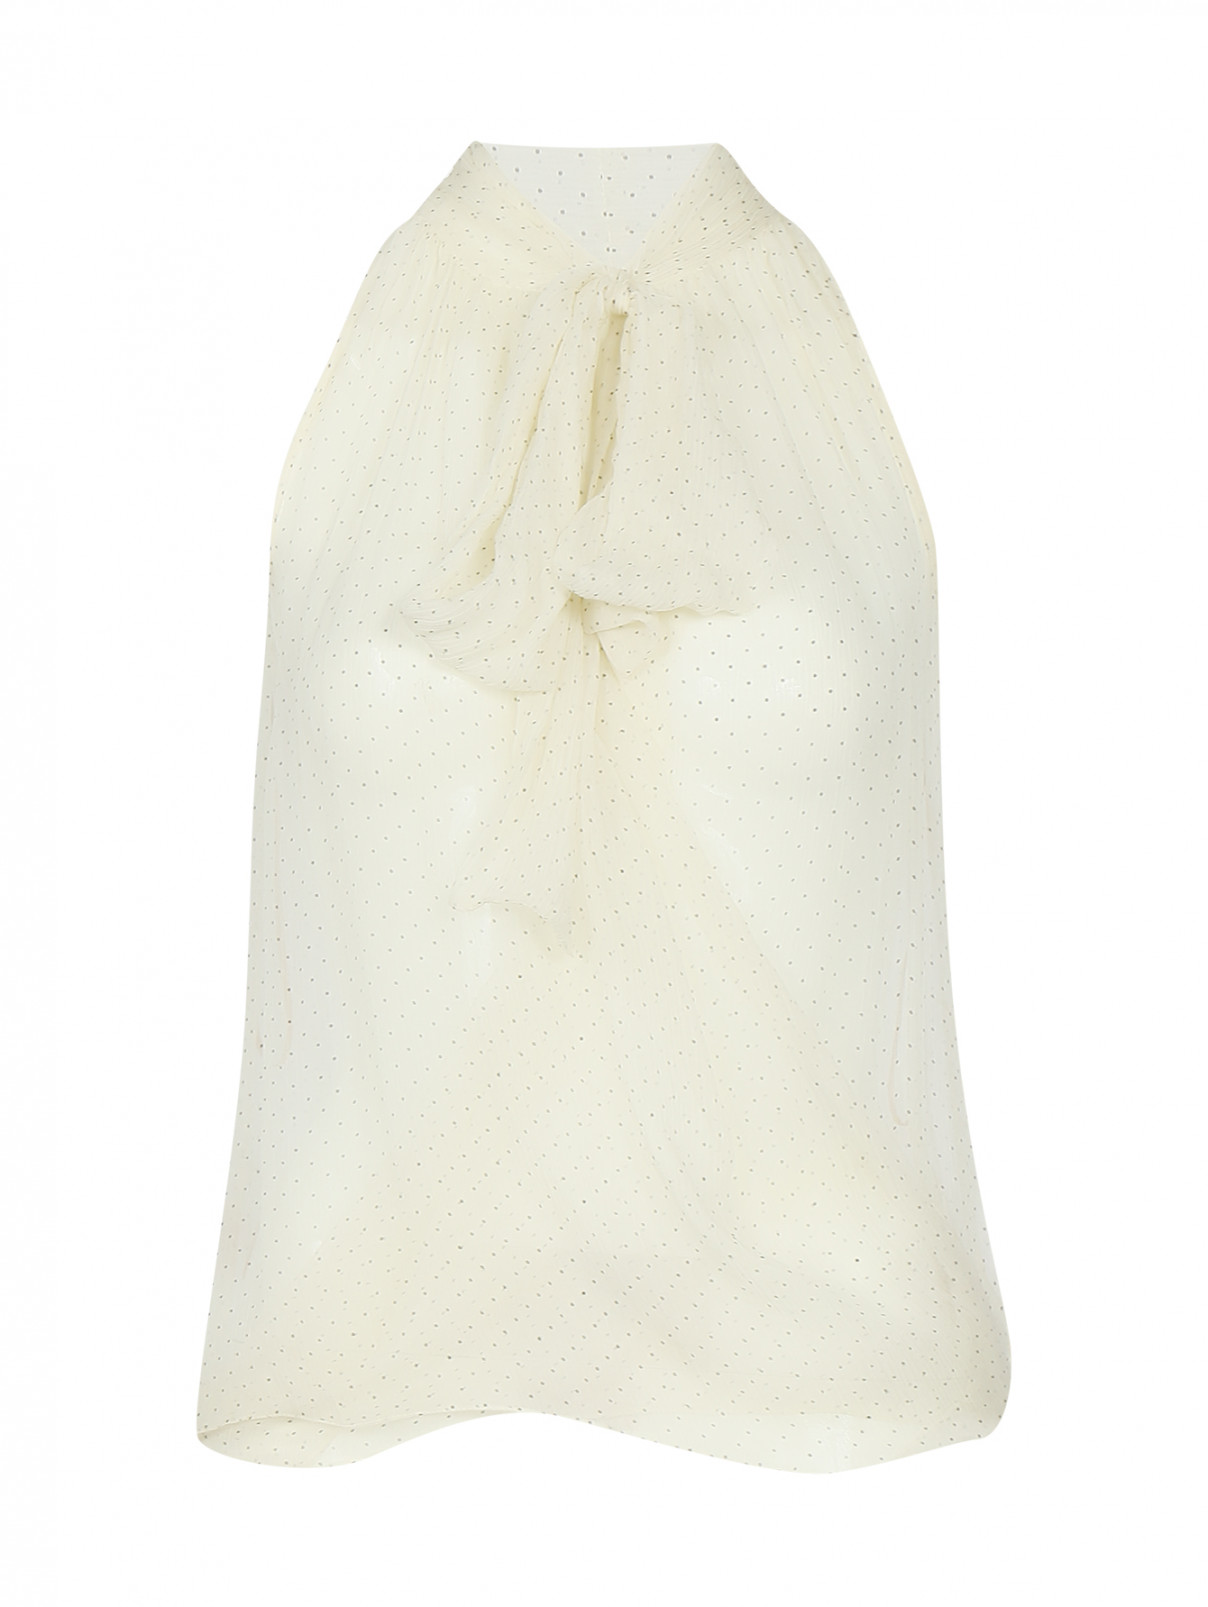 Топ из шелка John Galliano  –  Общий вид  – Цвет:  Белый